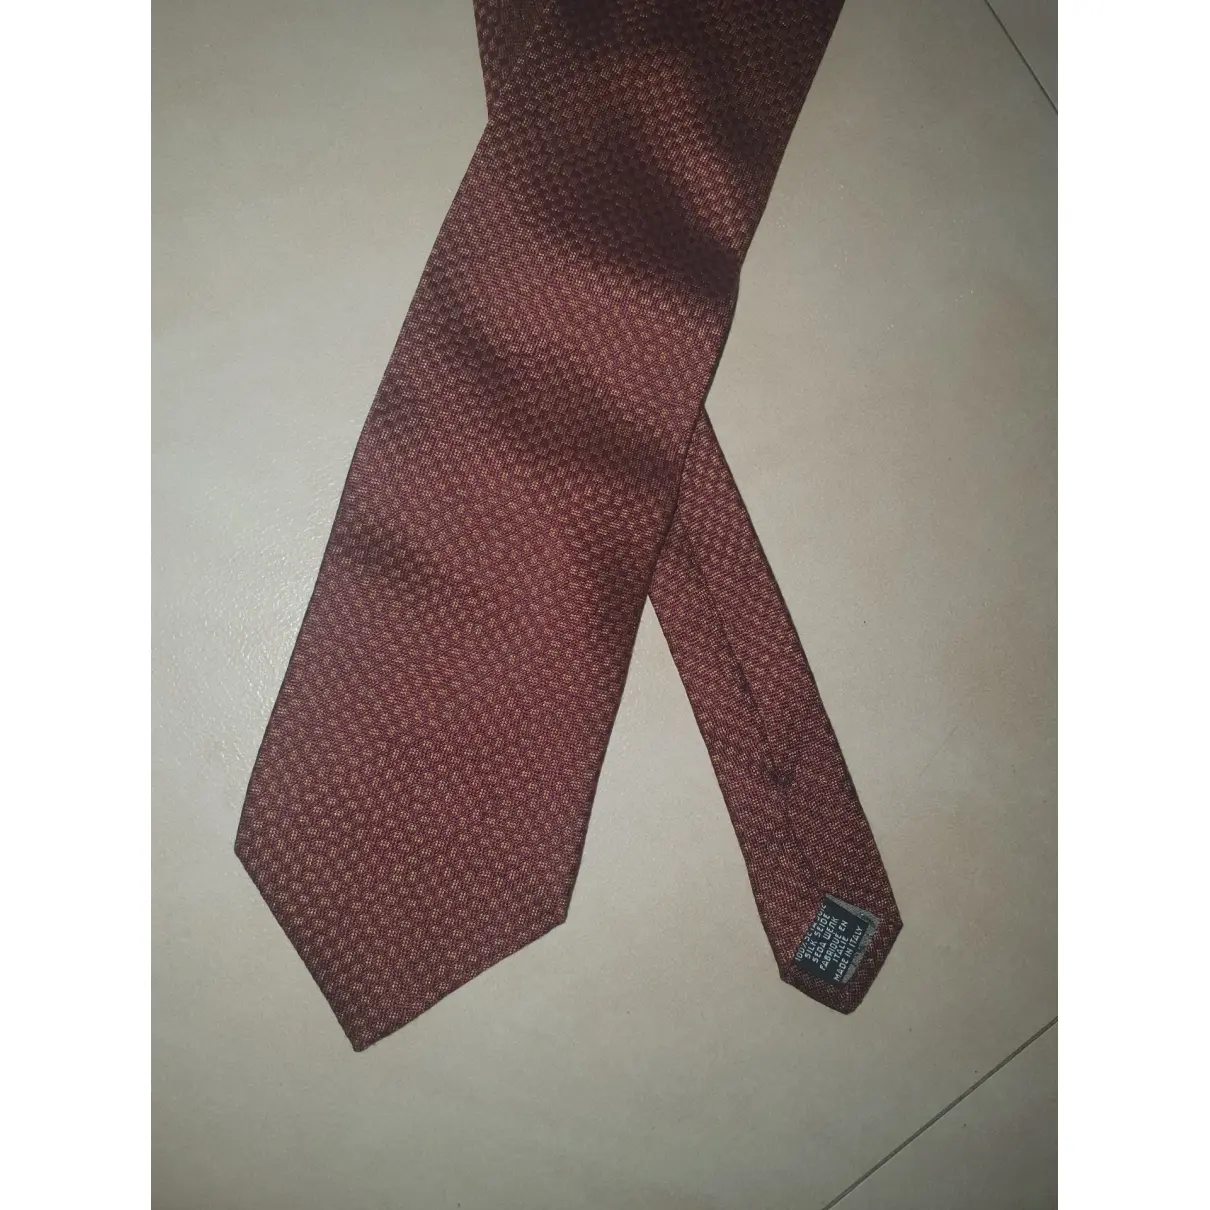 Gianfranco Ferré Silk tie for sale